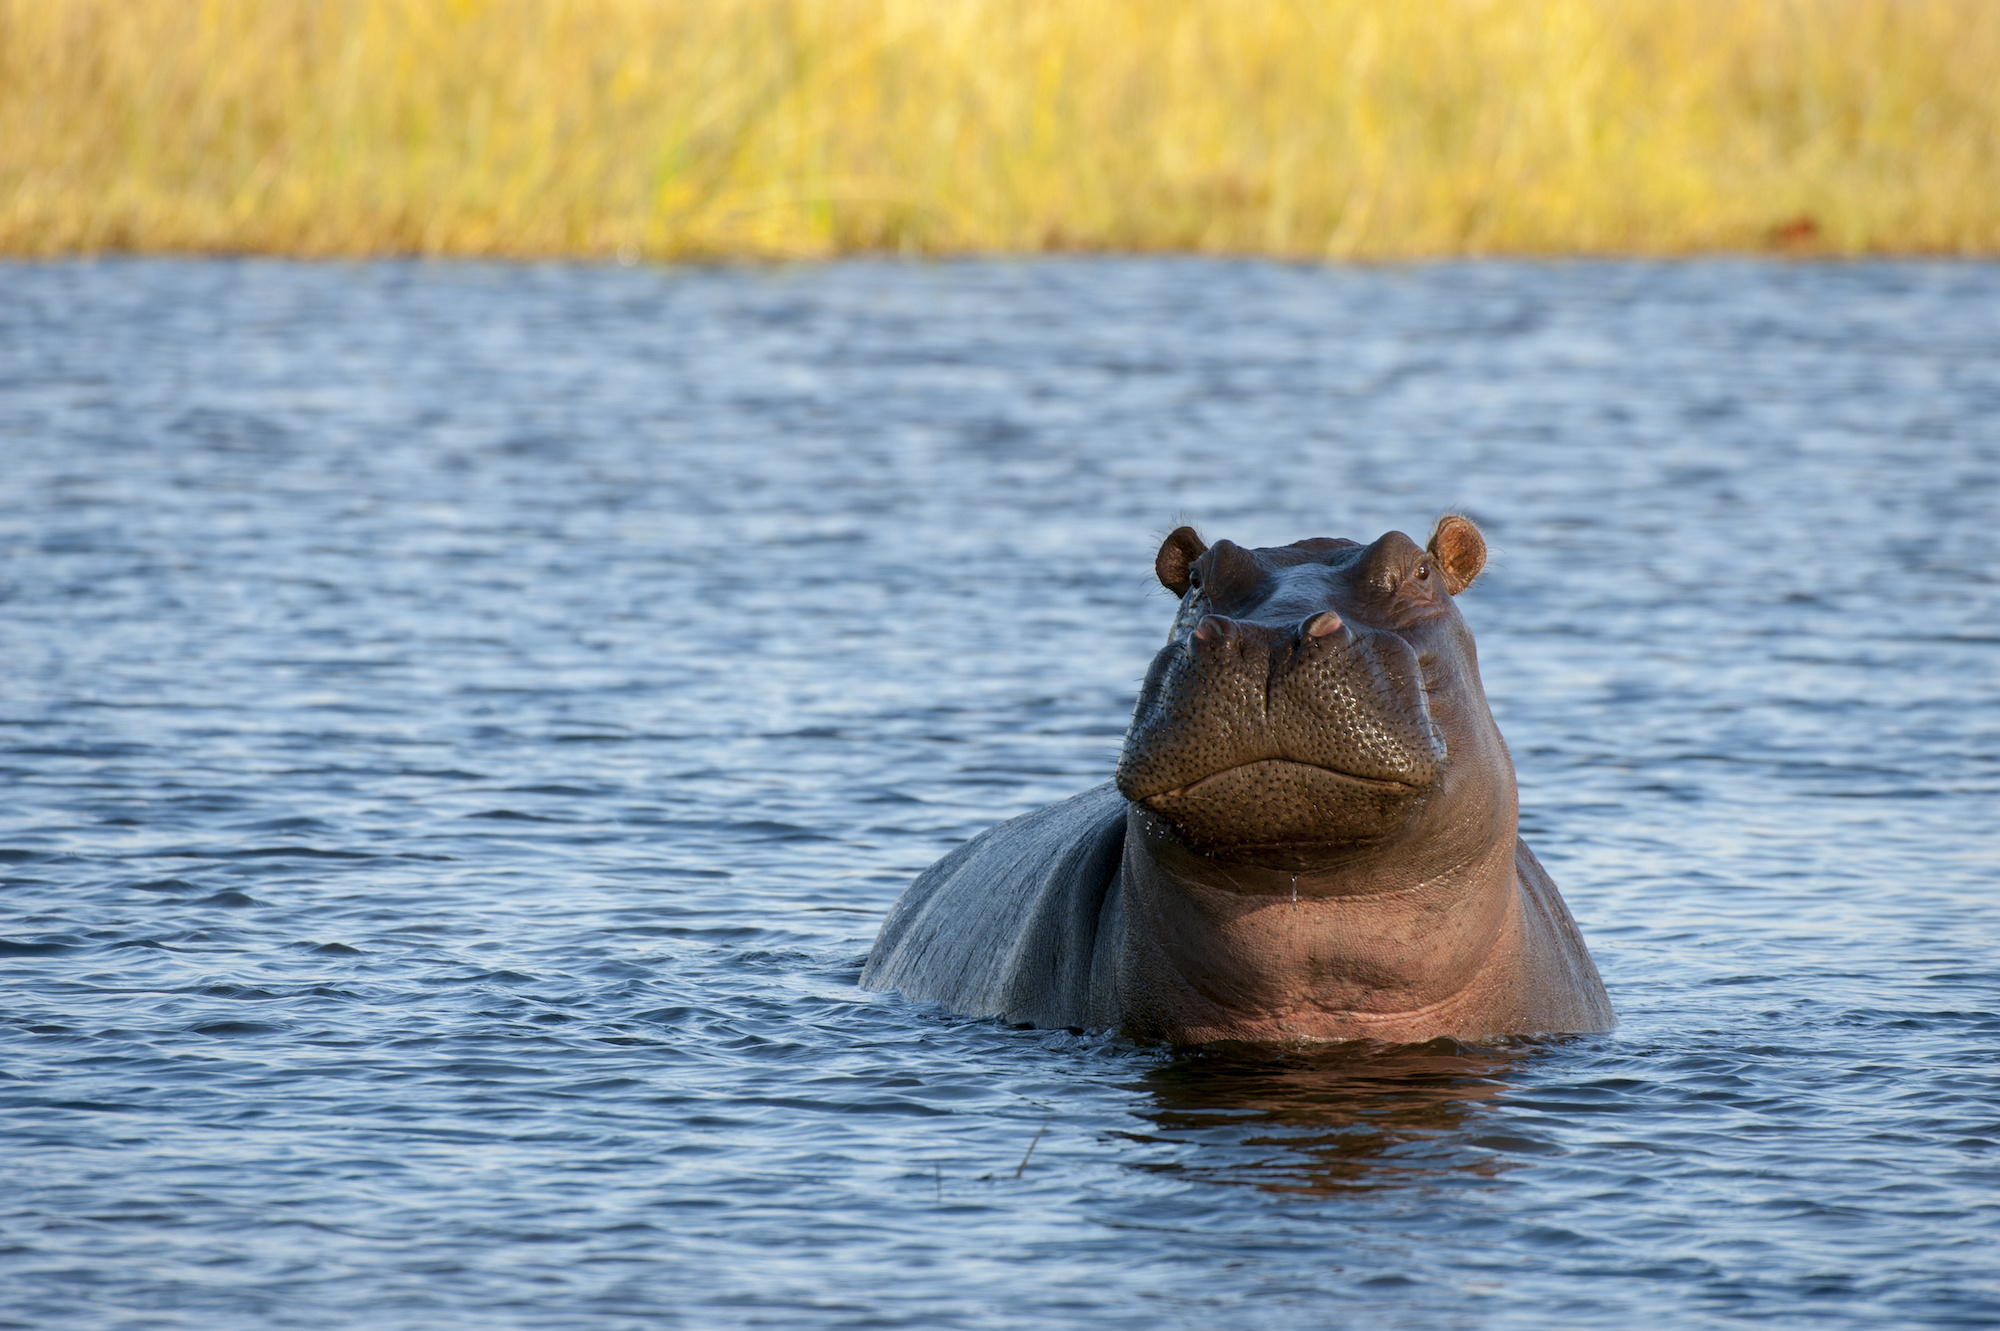 BOTSWANA - 2014/06/12: Hippopotamus (Hippopotamus amphibius) in river near Chitabe in the Okavango Delta in northern part of Botswana. (Photo by Wolfgang Kaehler/LightRocket via Getty Images)